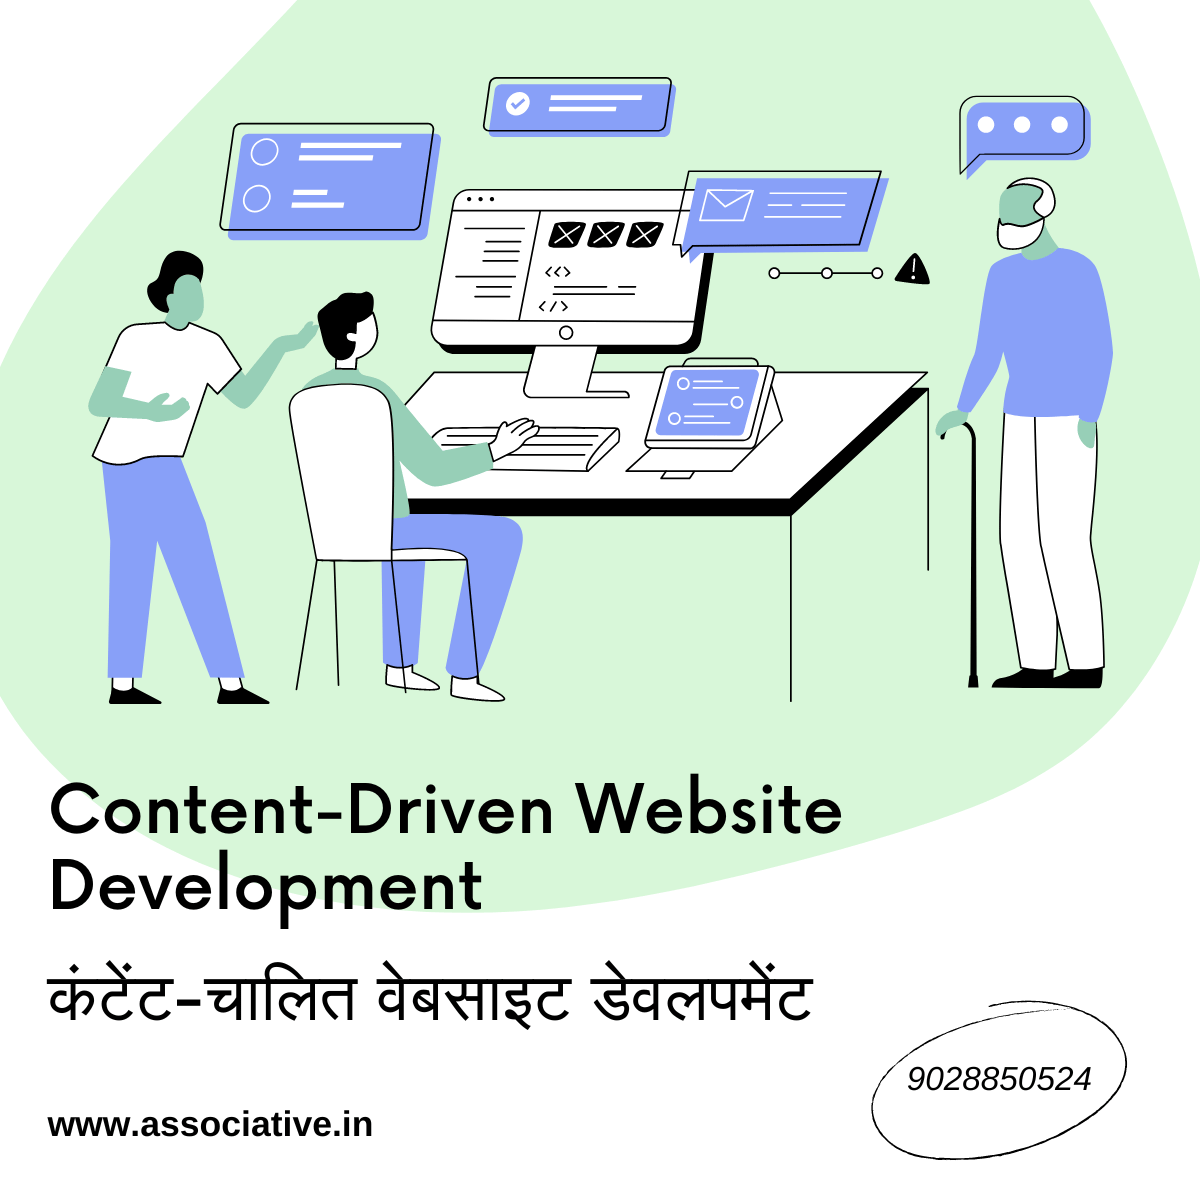 Content-Driven Website Development कंटेंट-चालित वेबसाइट डेवलपमेंट